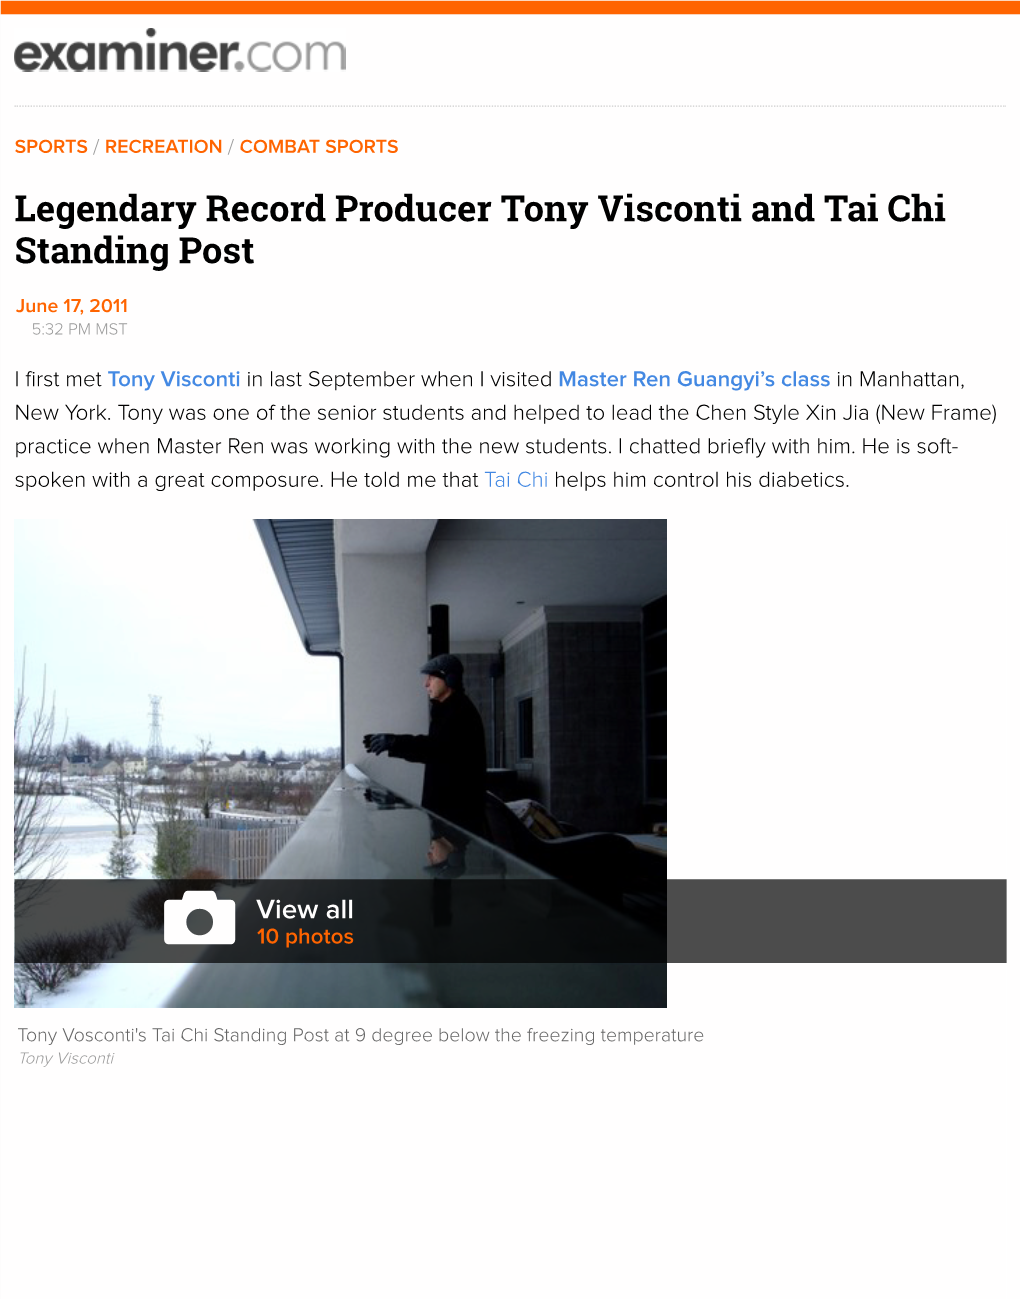 Legendary Record Producer Tony Visconti and Tai Chi Standing Post